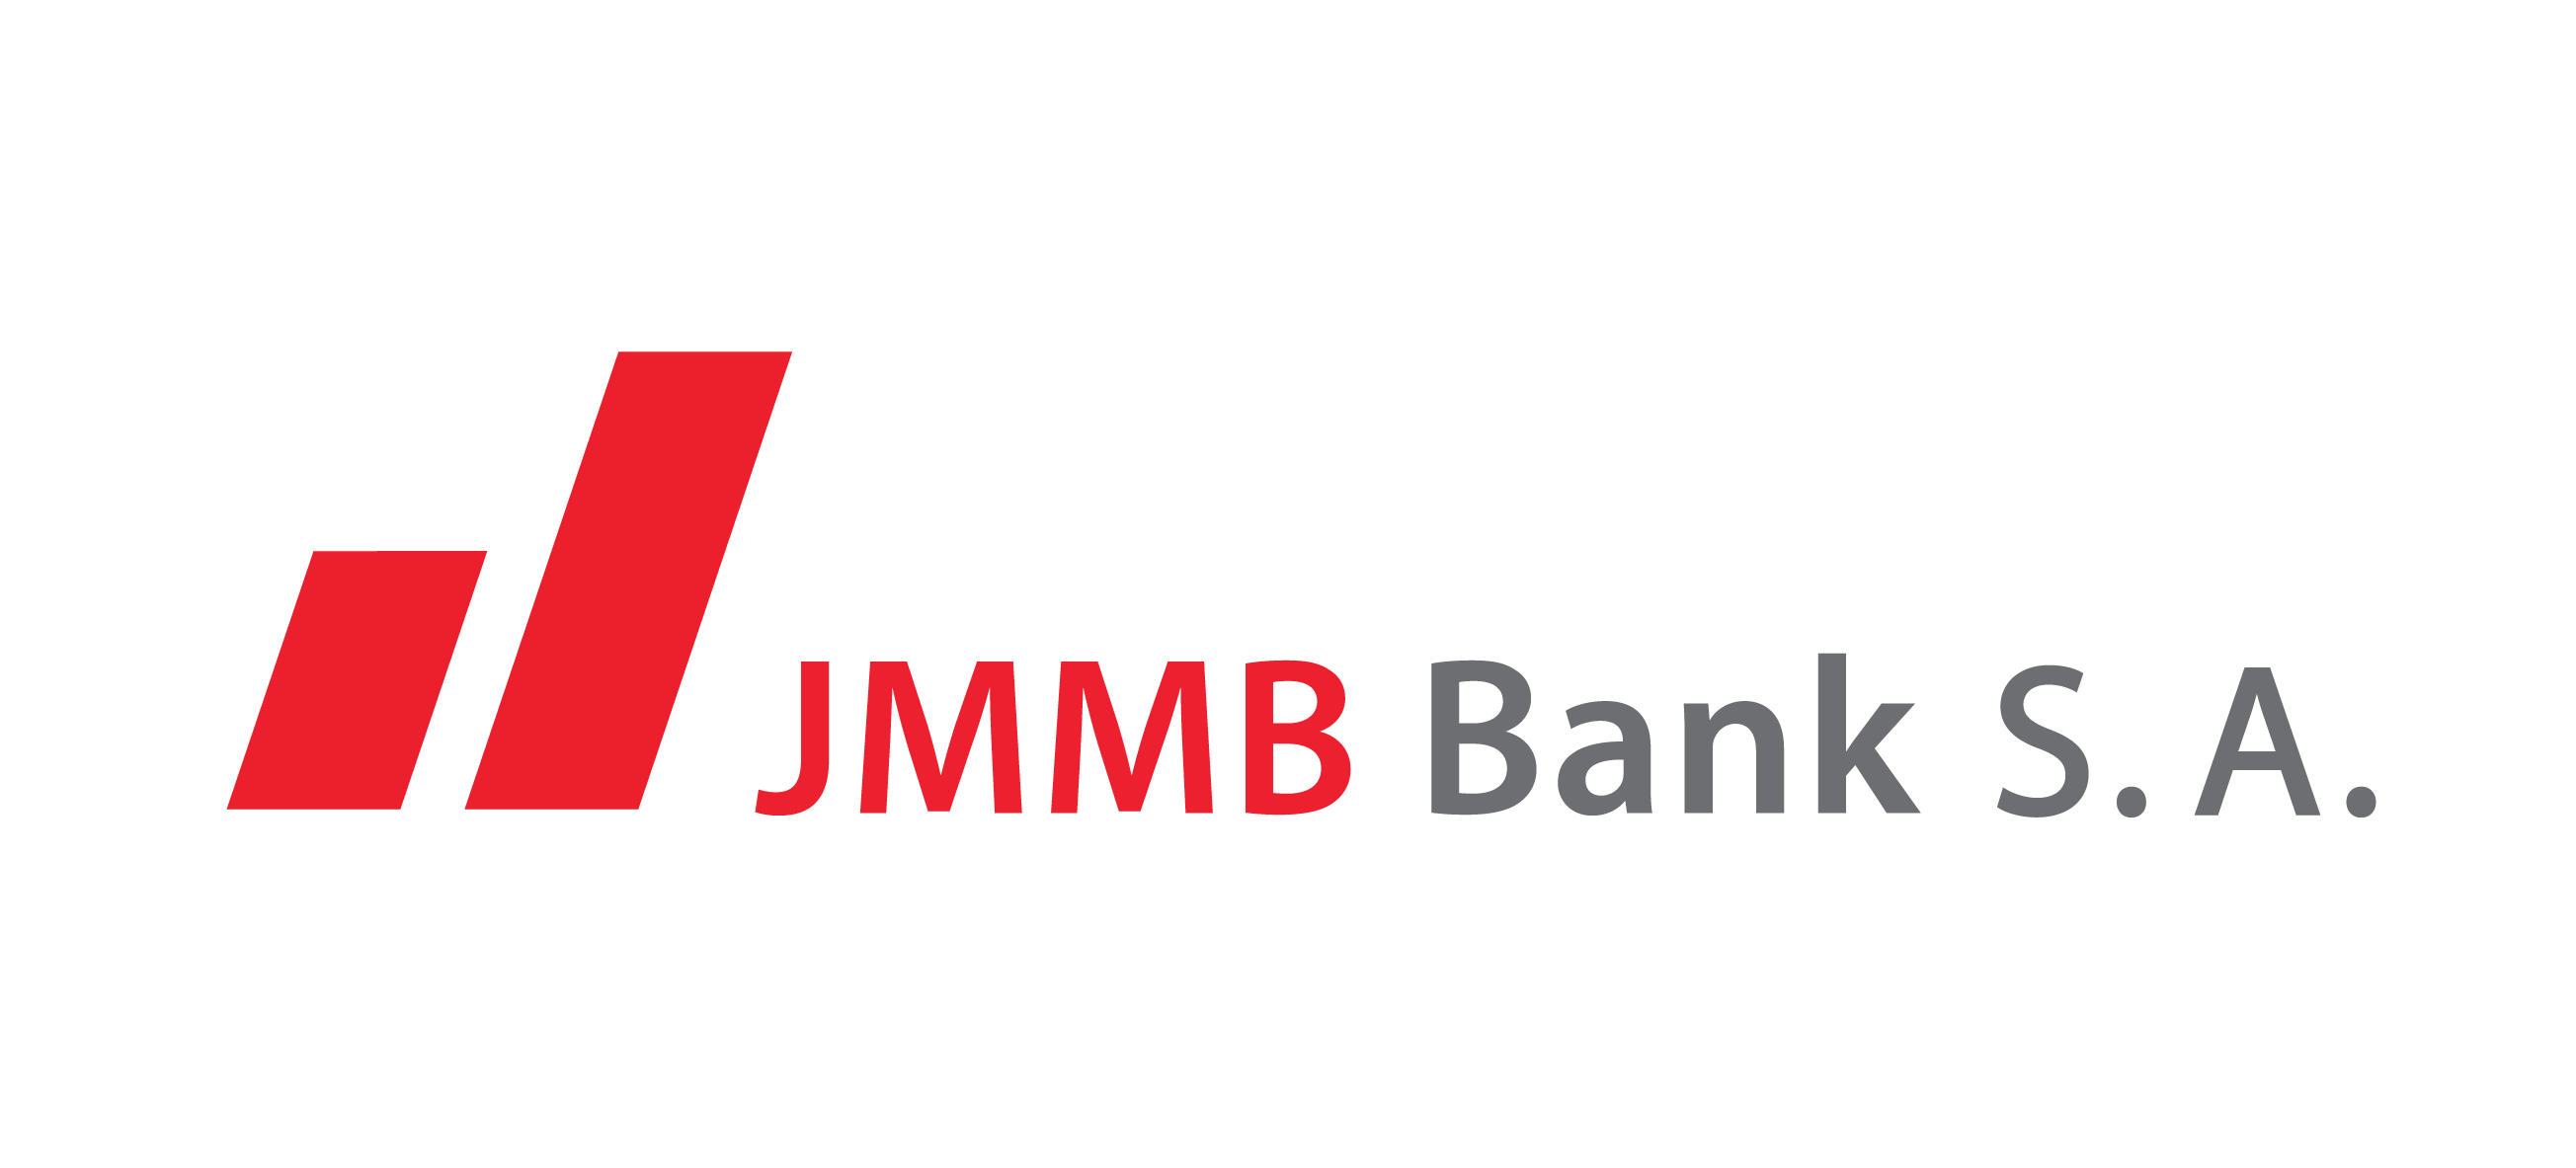 JMMB Bank S. A.